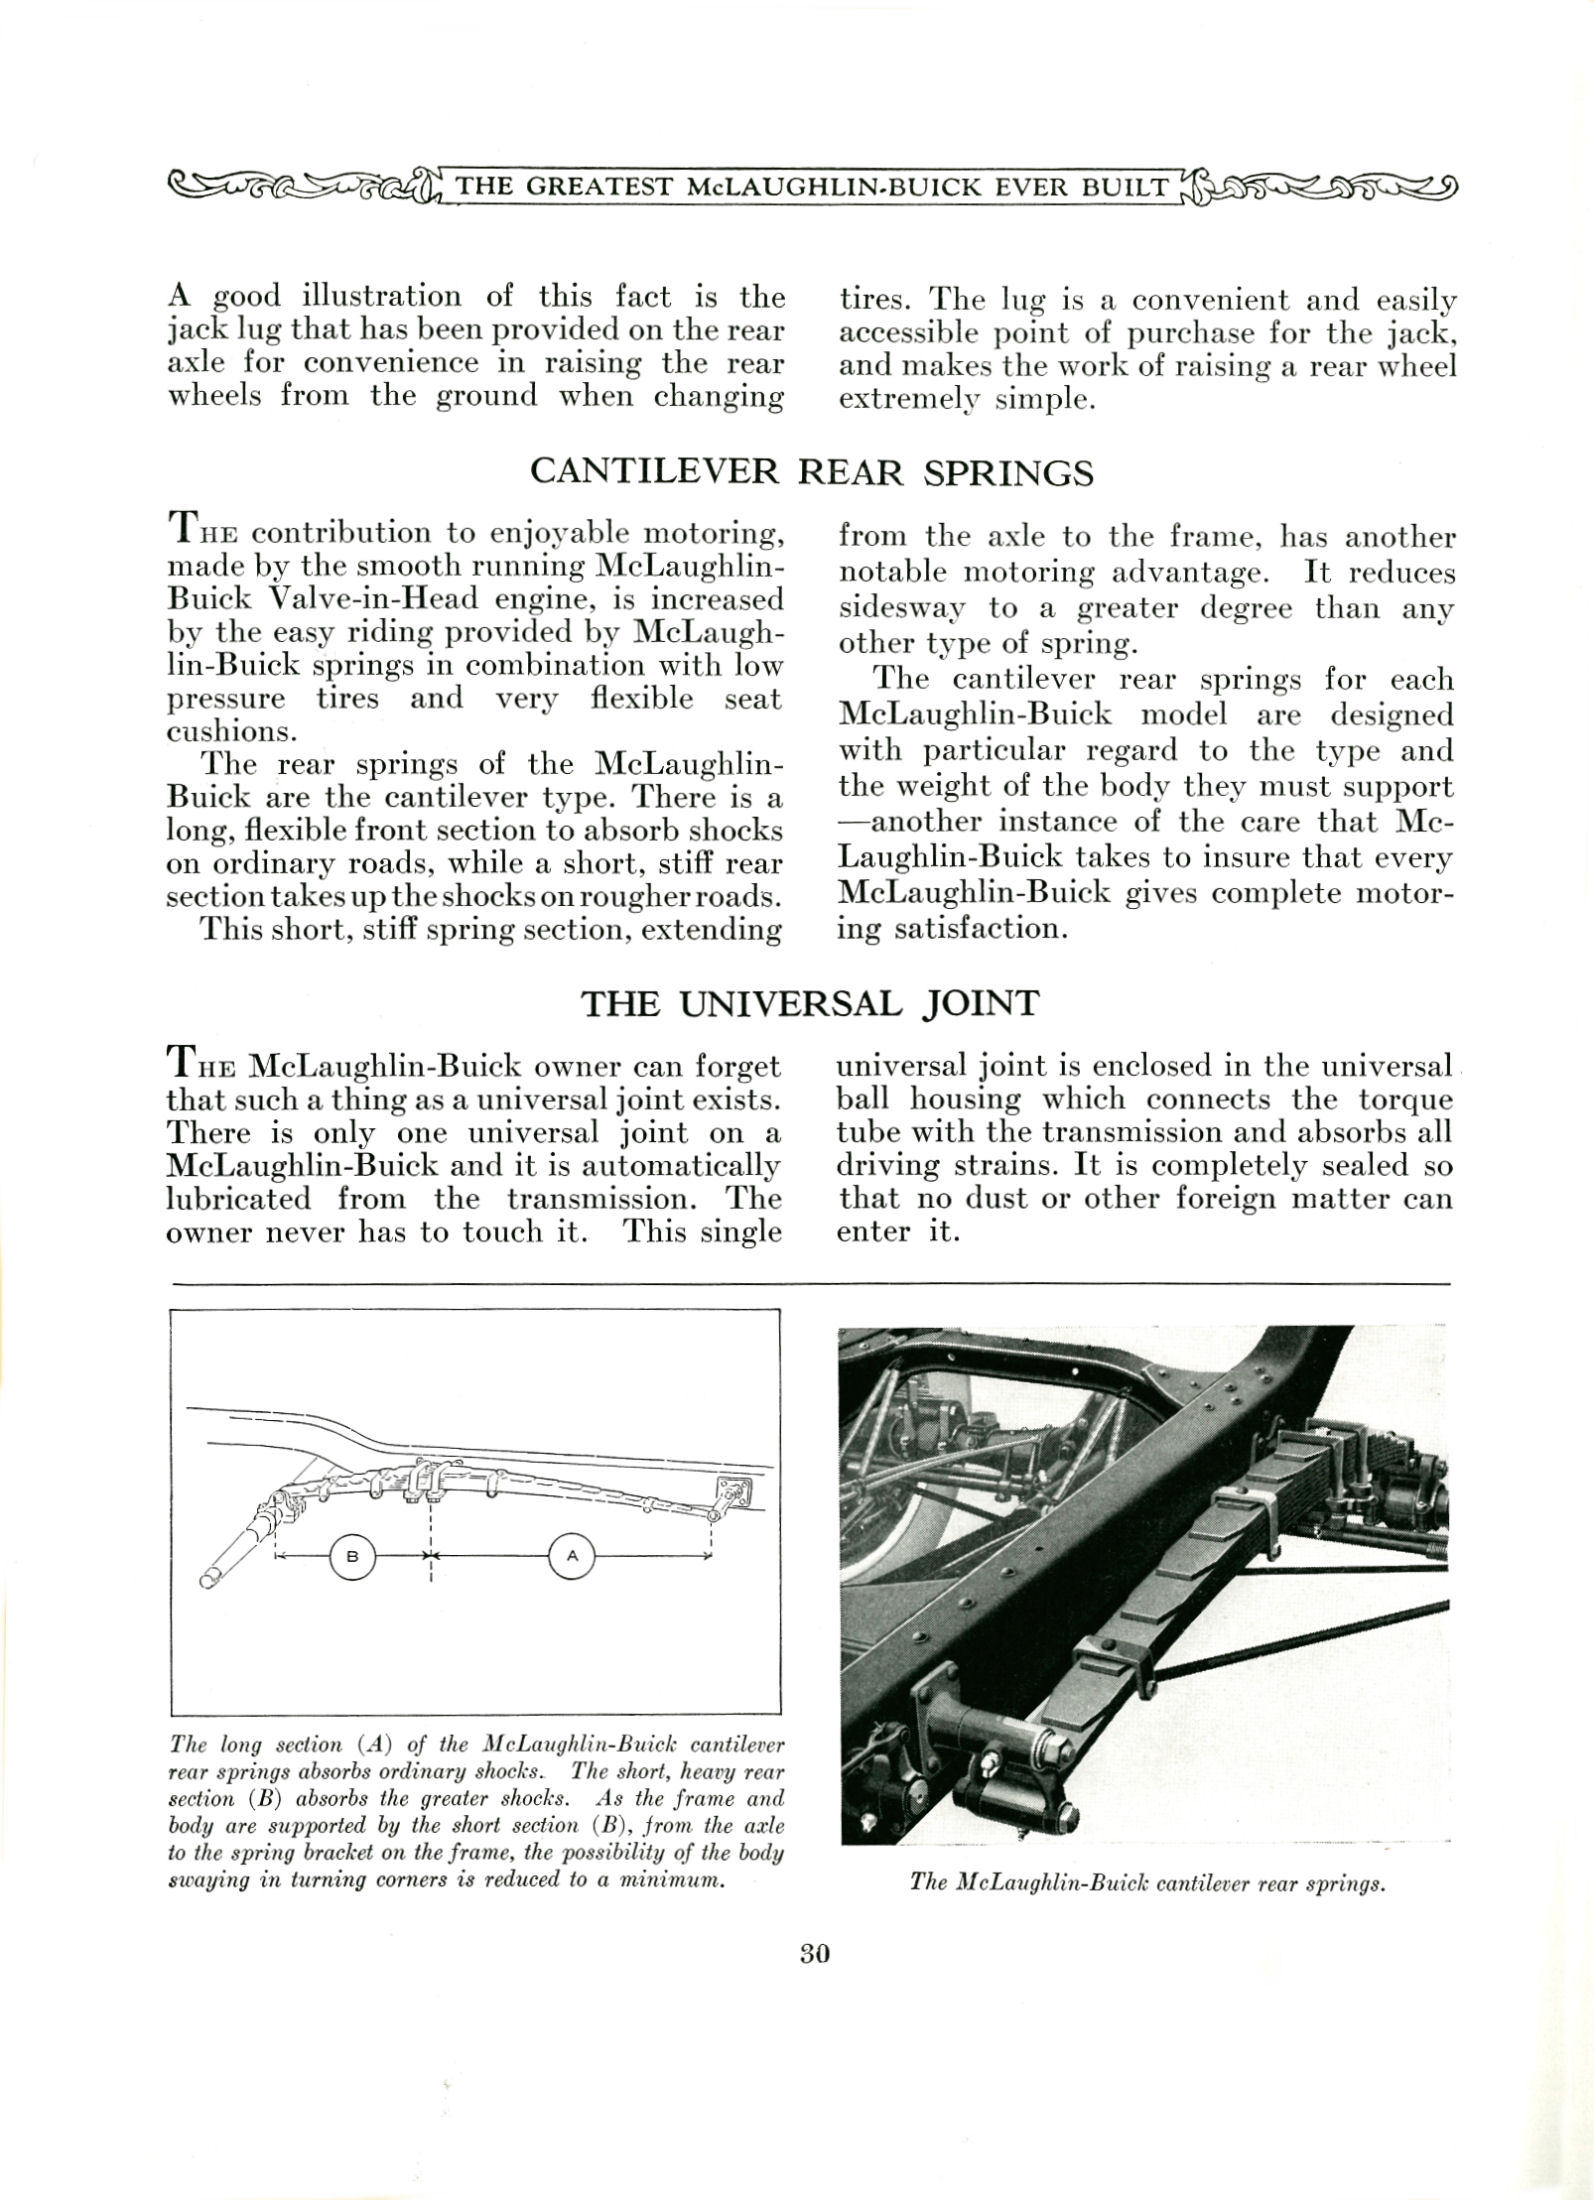 1930 McLaughlin Buick Booklet-30